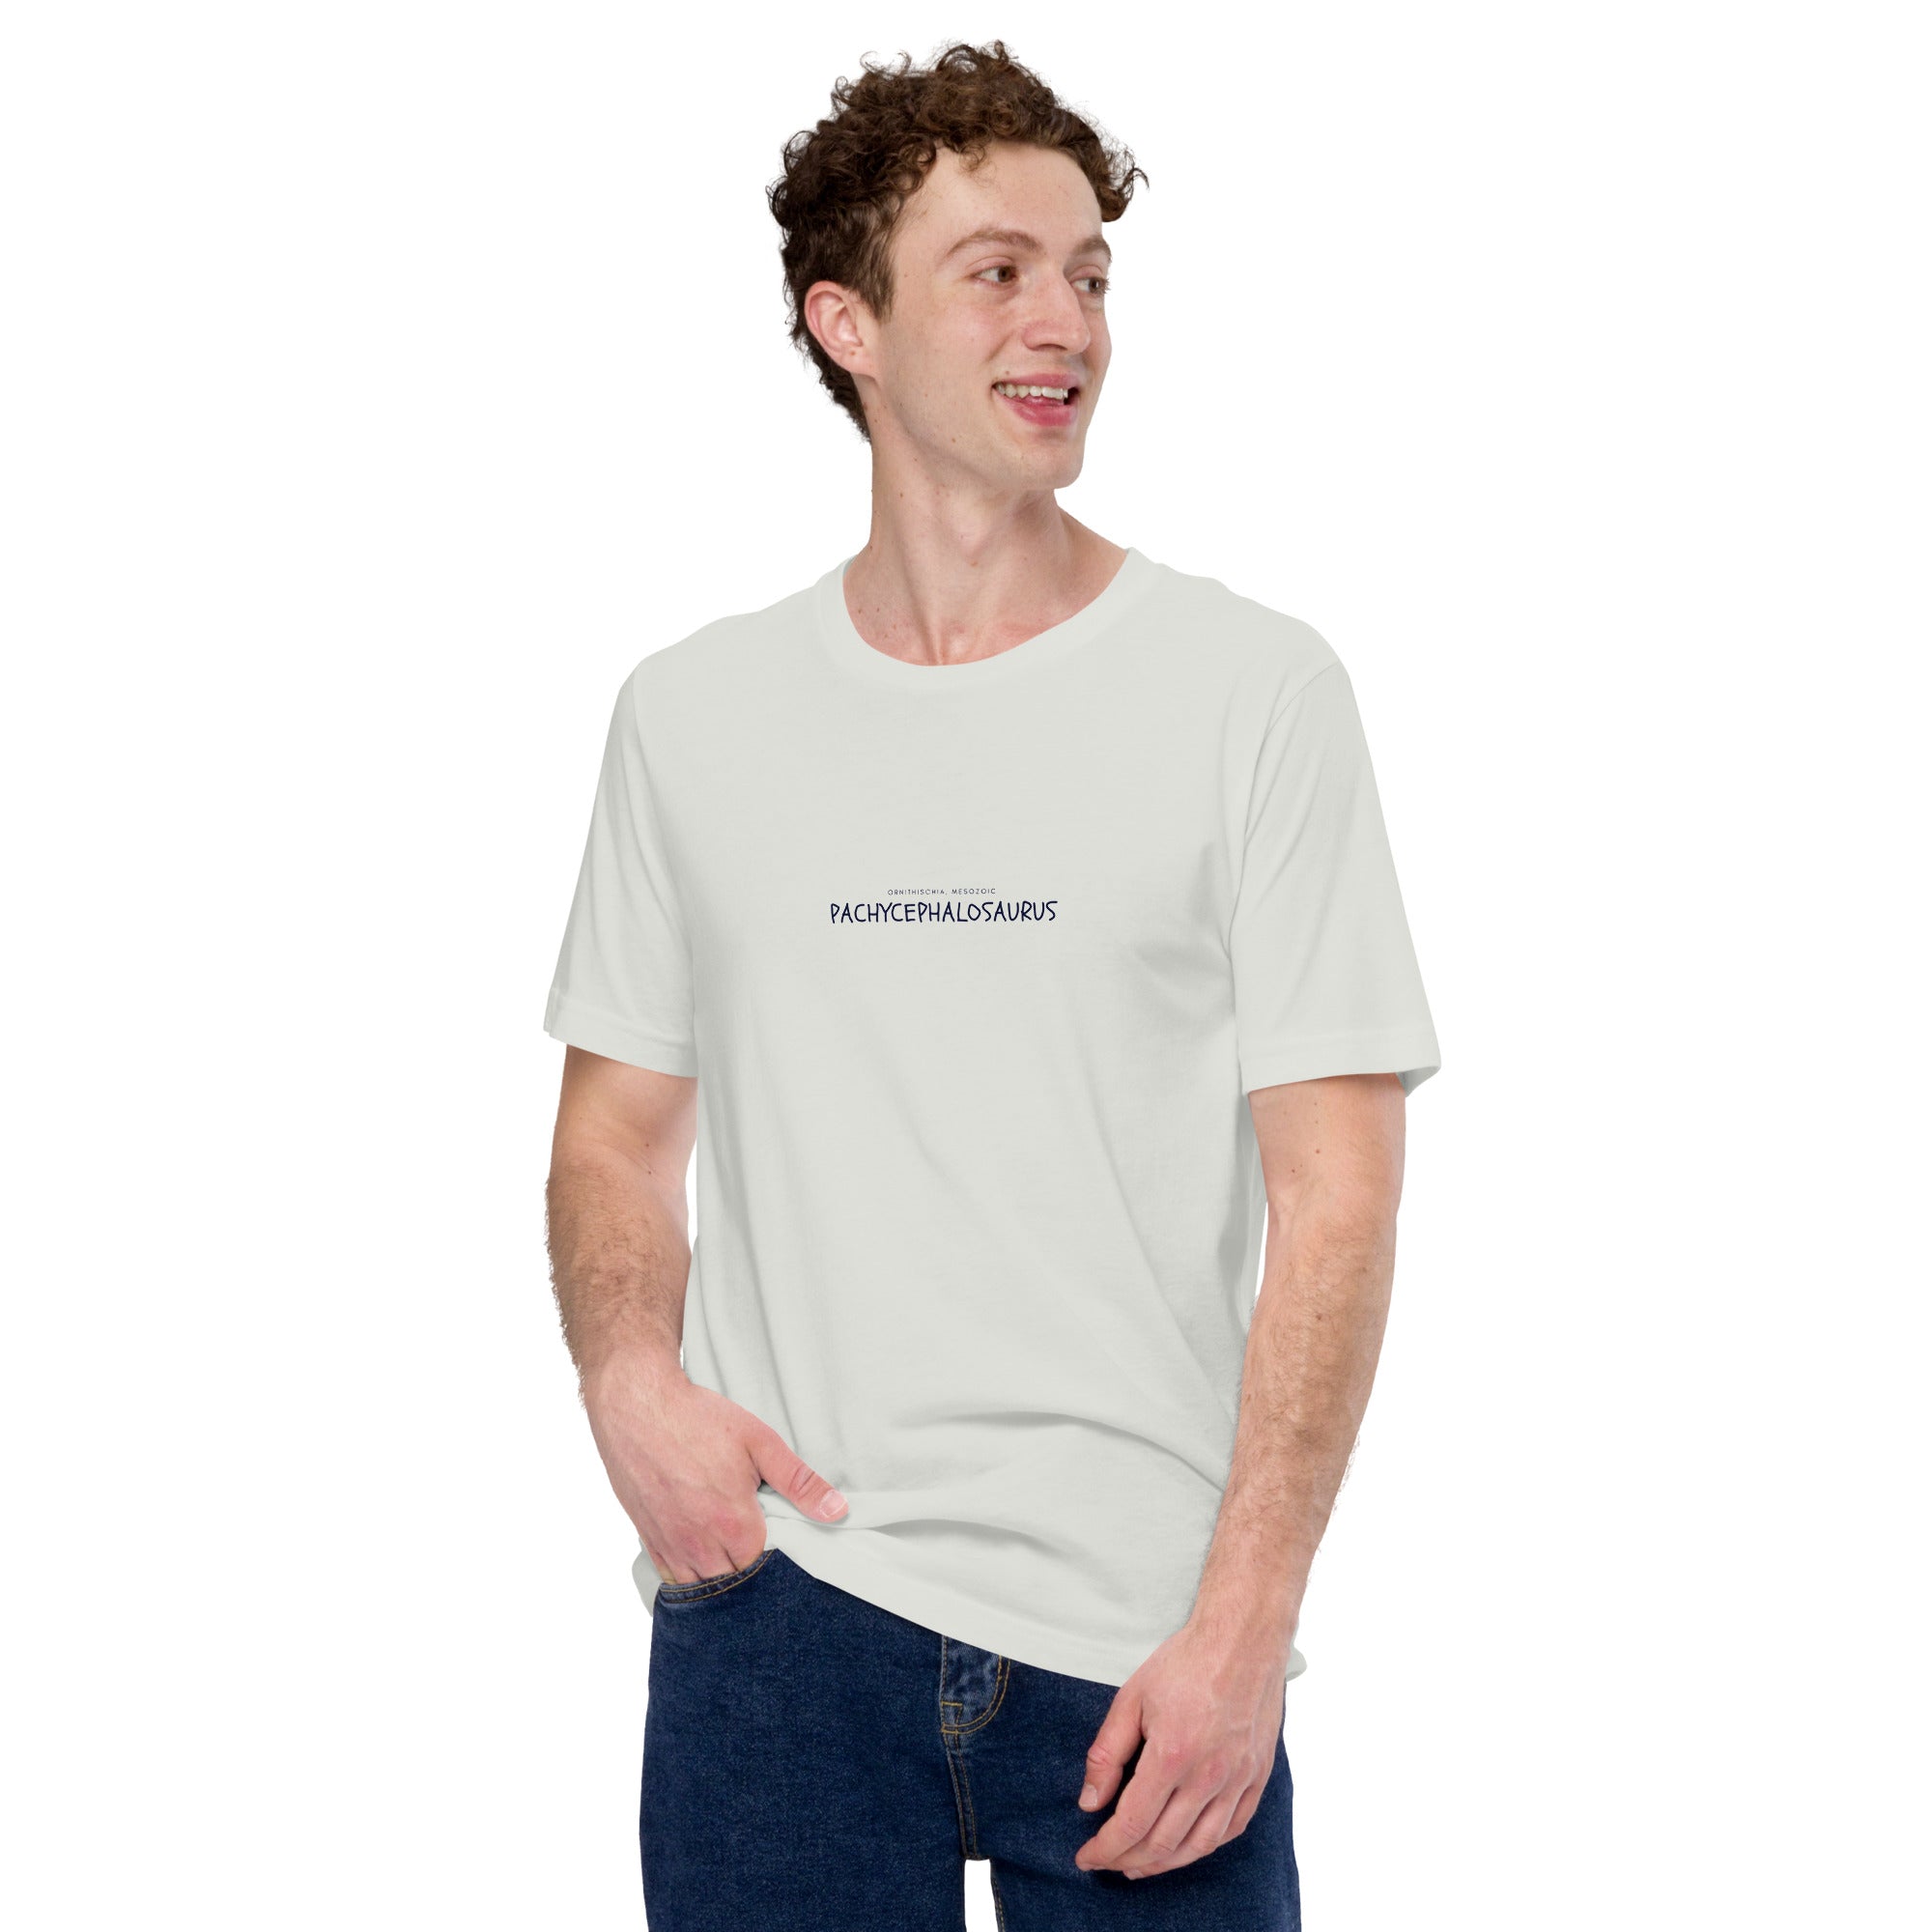 Camiseta unisex con texto "Pachycephalosaurus"